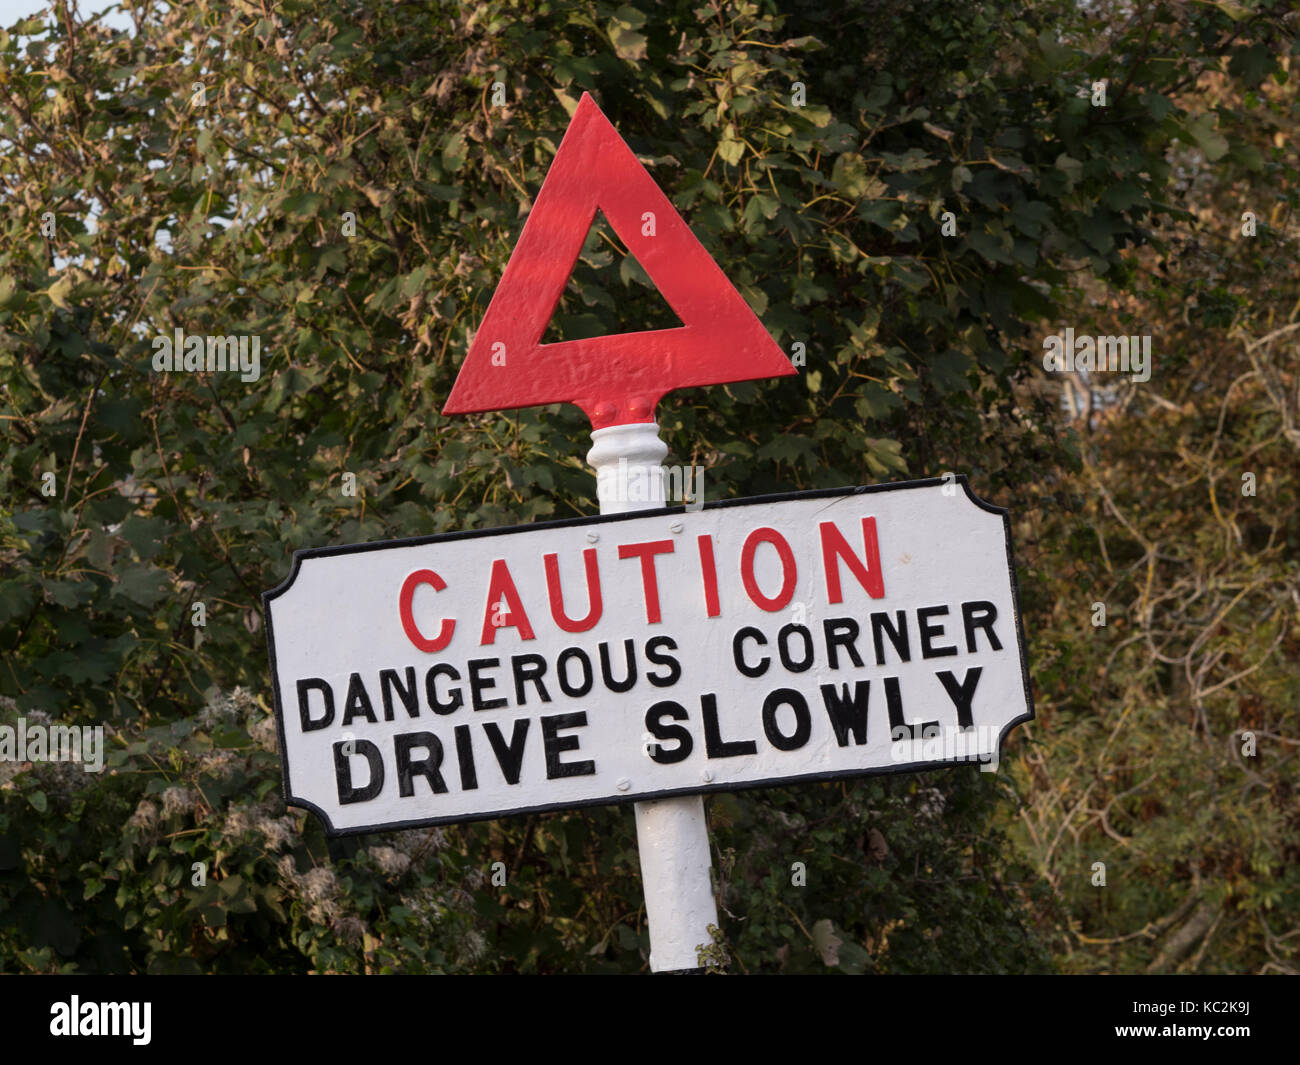 Vintage road traffic warning sign - caution dangerous corner drive slowly - England, UK Stock Photo